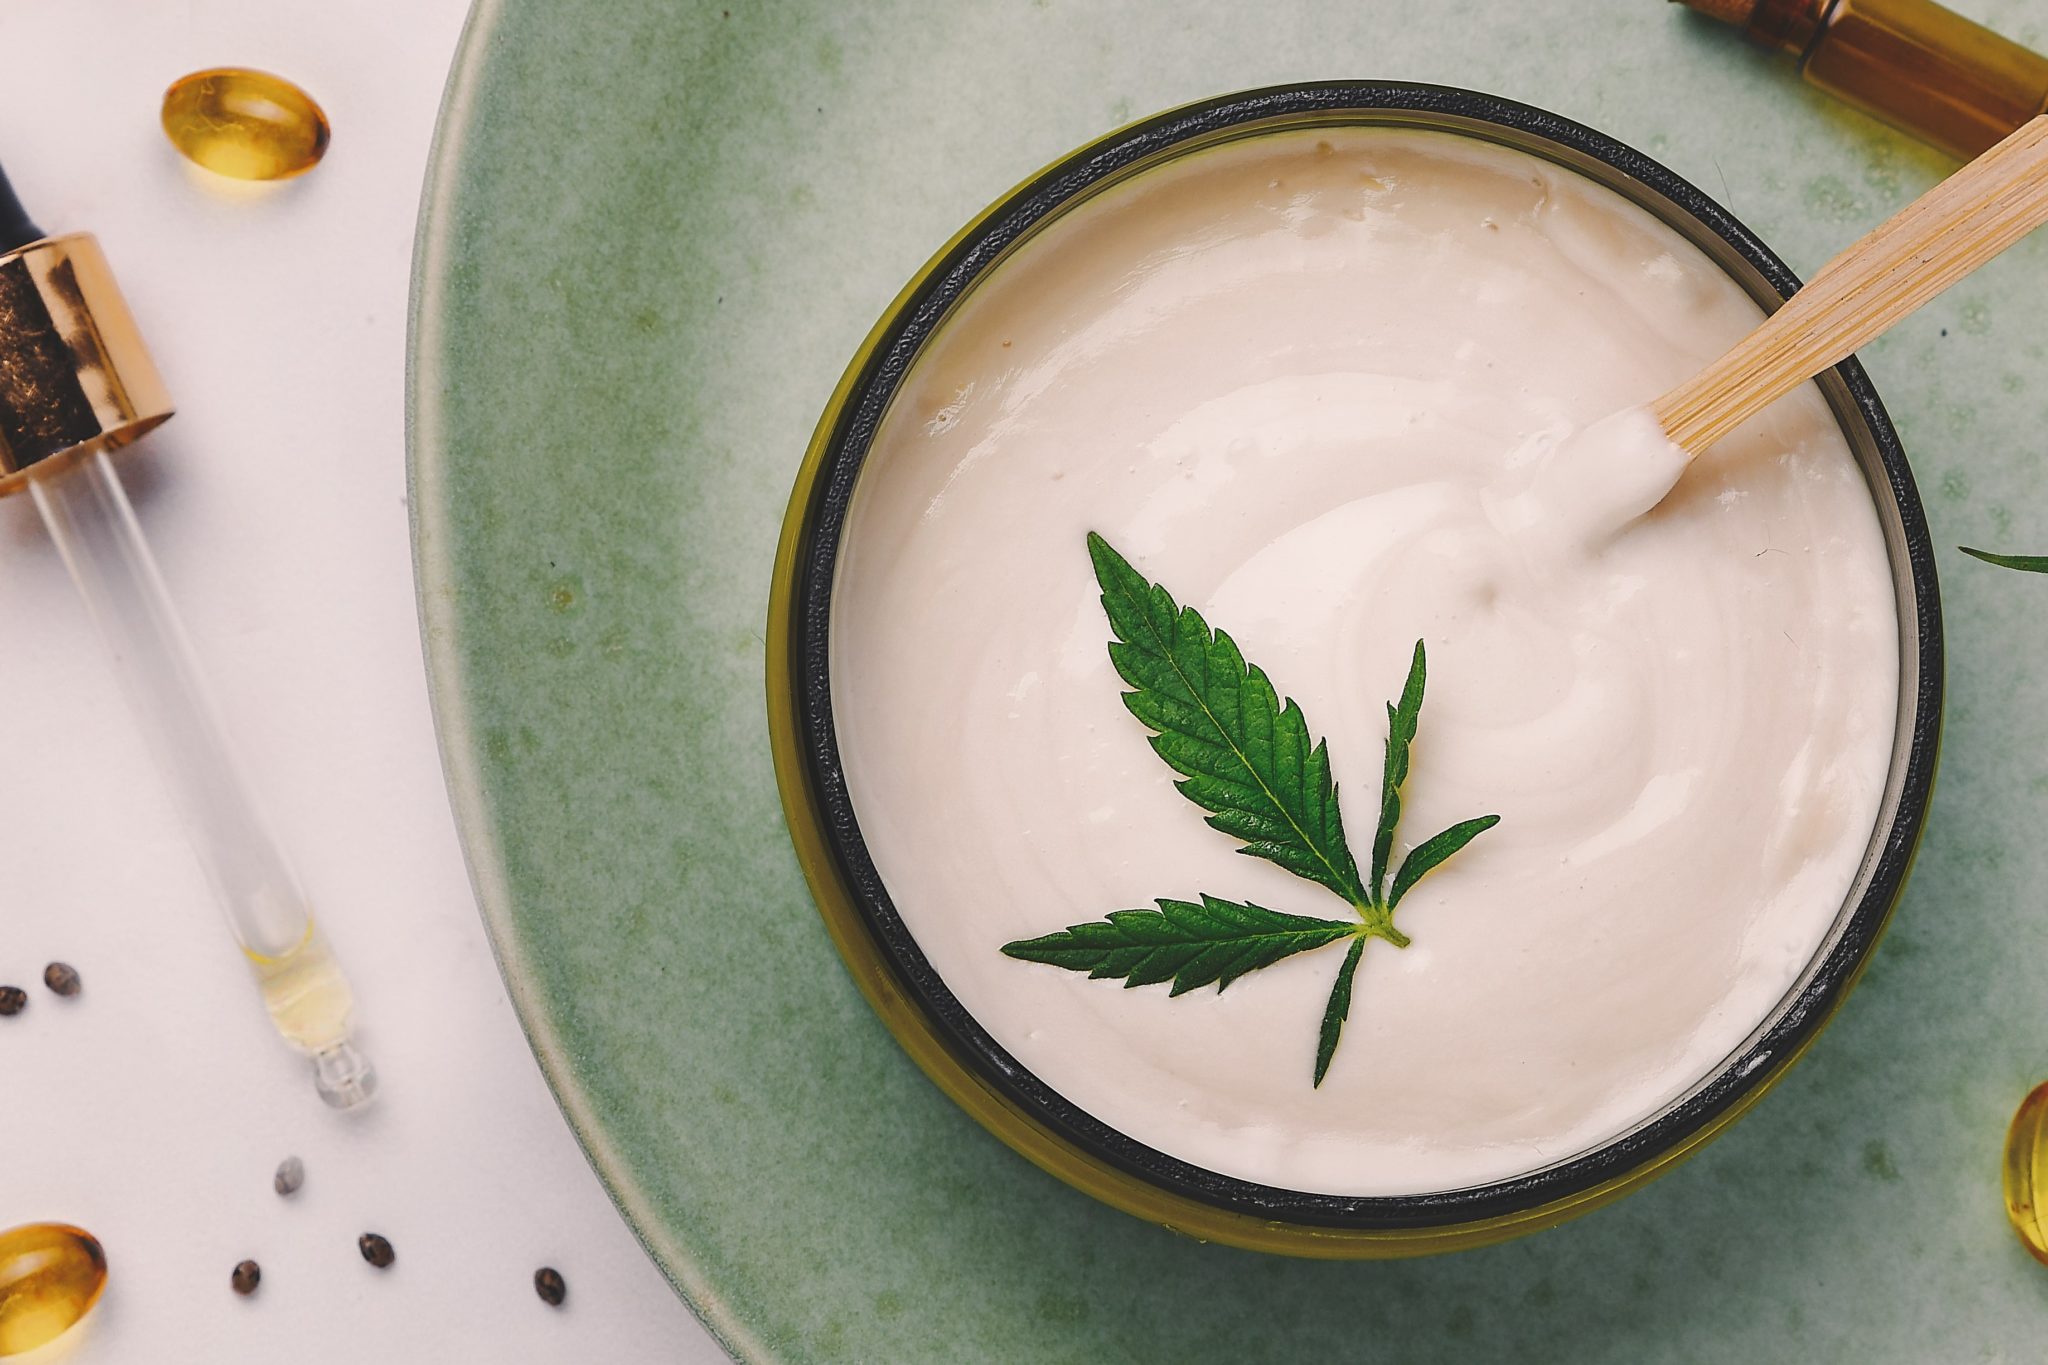 Jar of hemp white lotion. Cannabis cream with marijuana leaf - cannabis concept. Flat lay, top view.